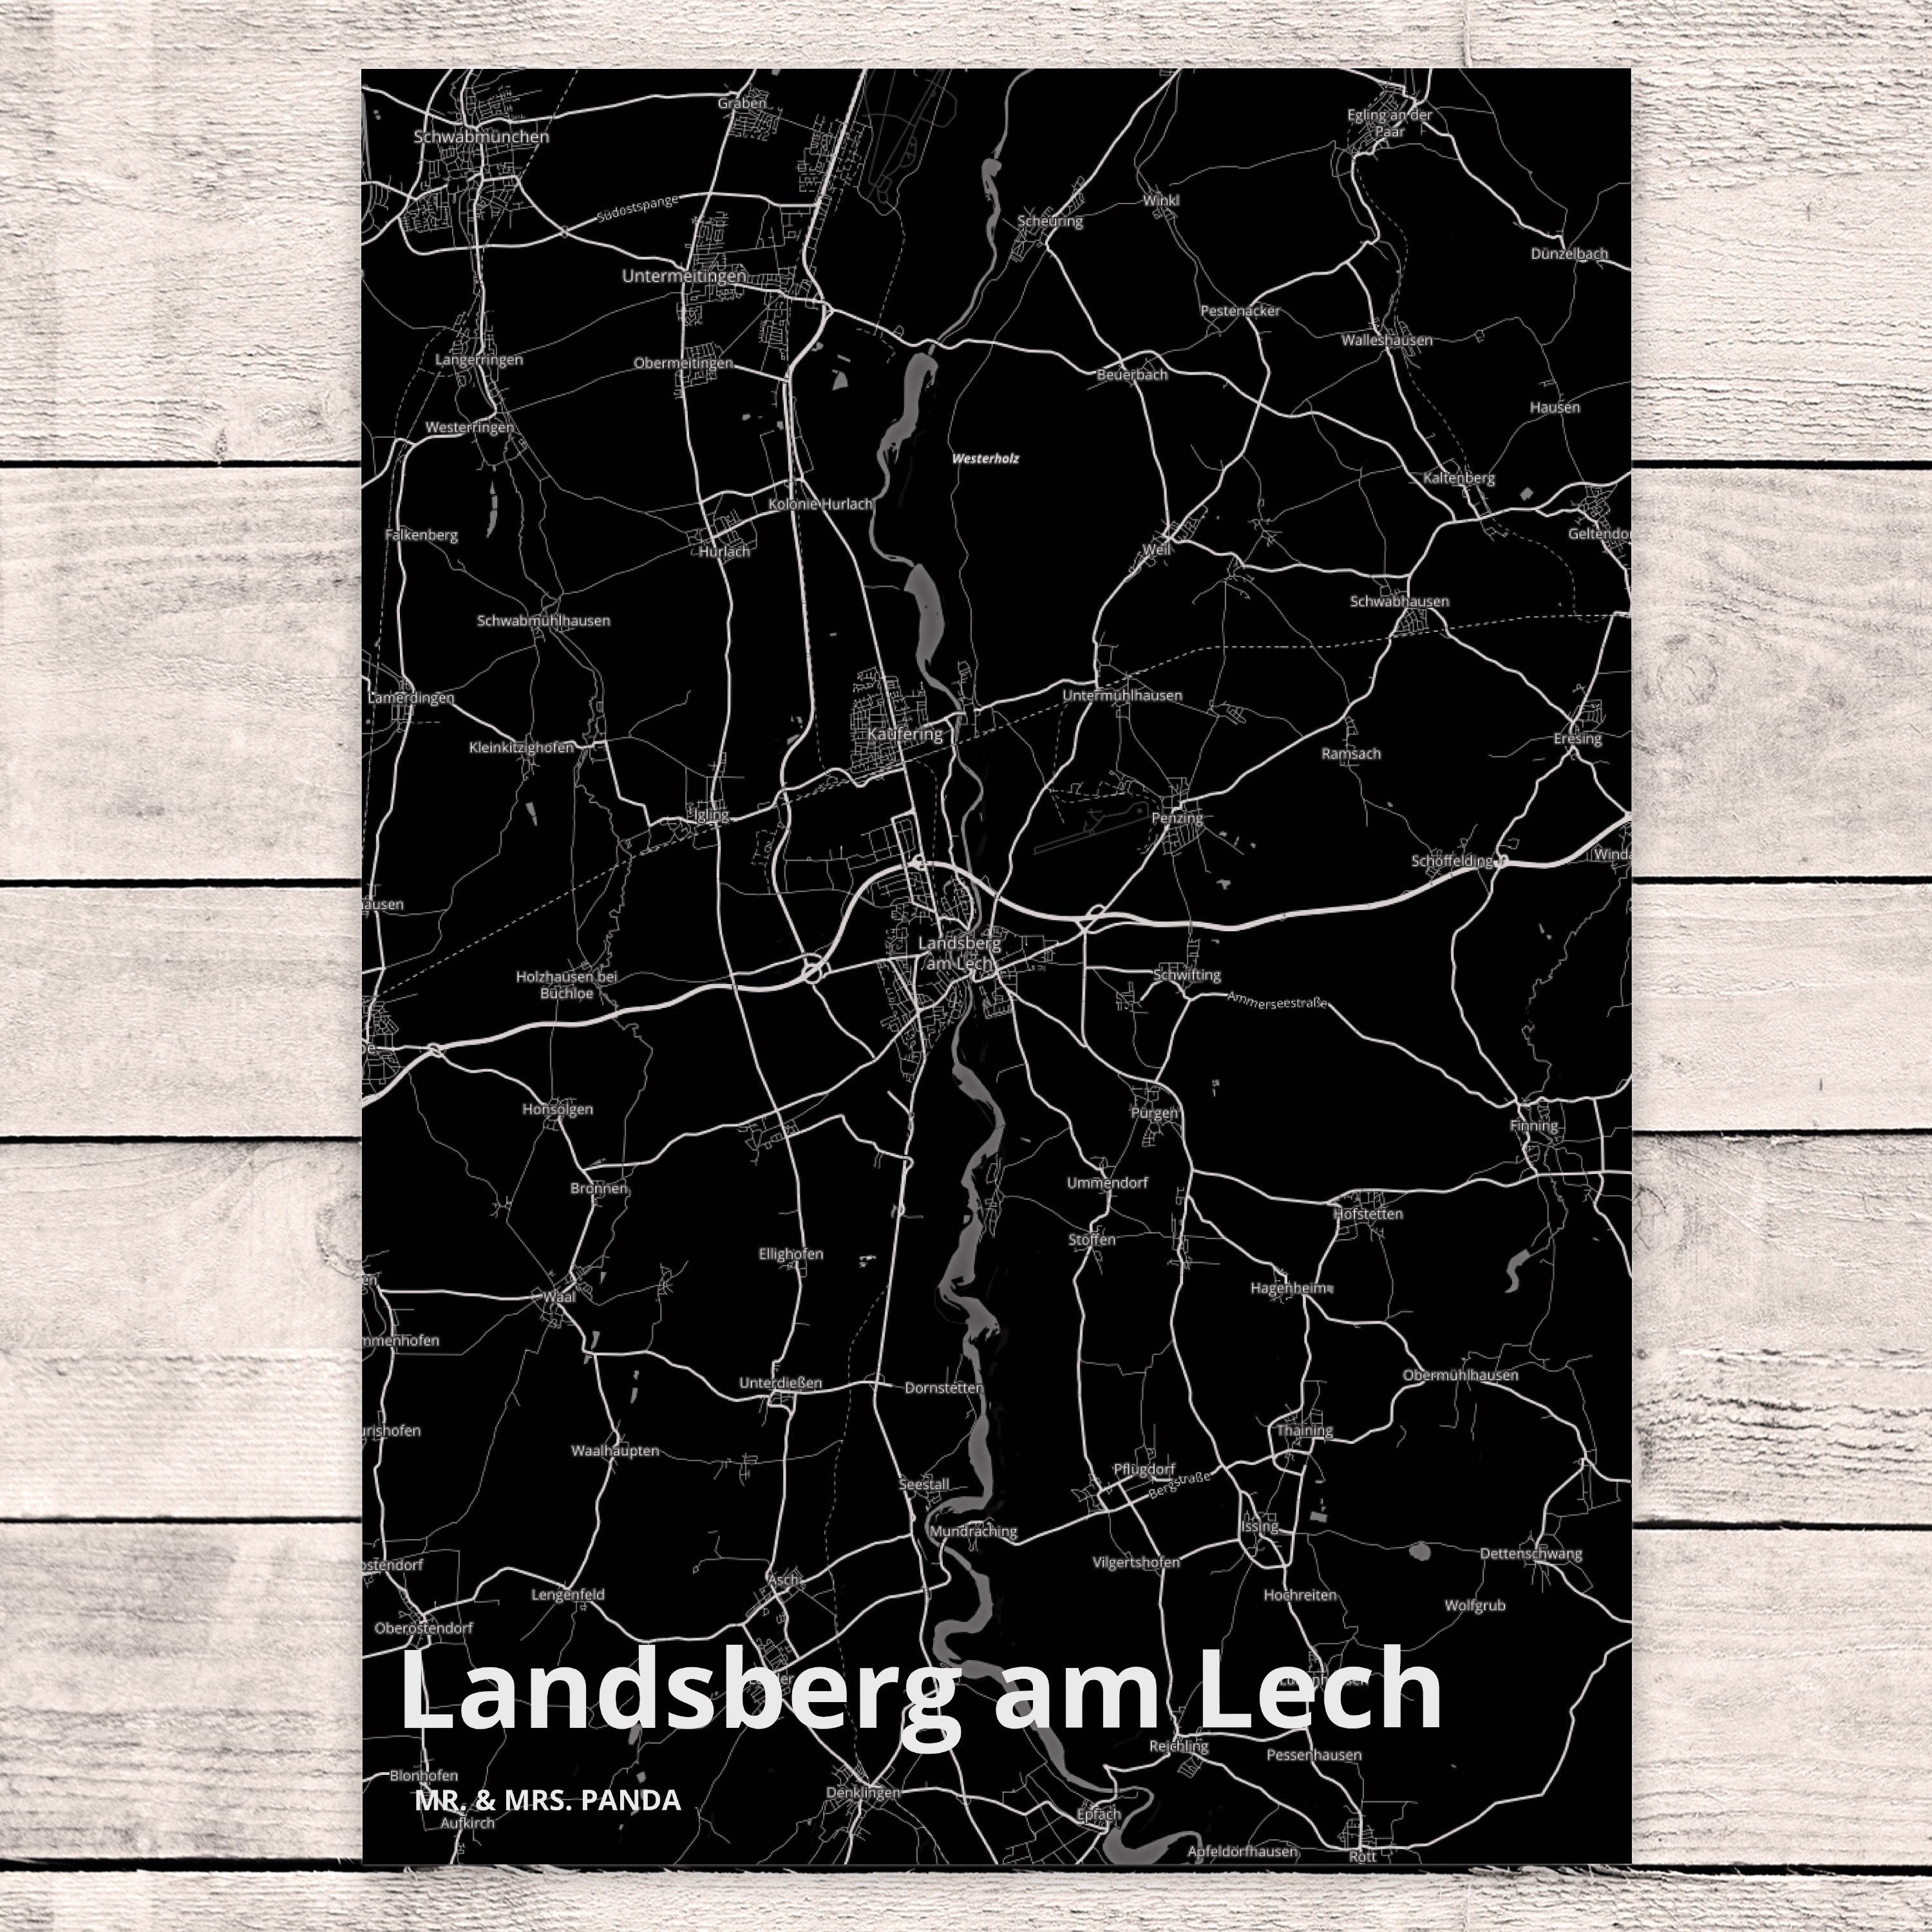 Stadt Postkarte Landsberg Dorf & Kar am Stadt, Panda - Mr. Ort, Dankeskarte, Lech Geschenk, Mrs.